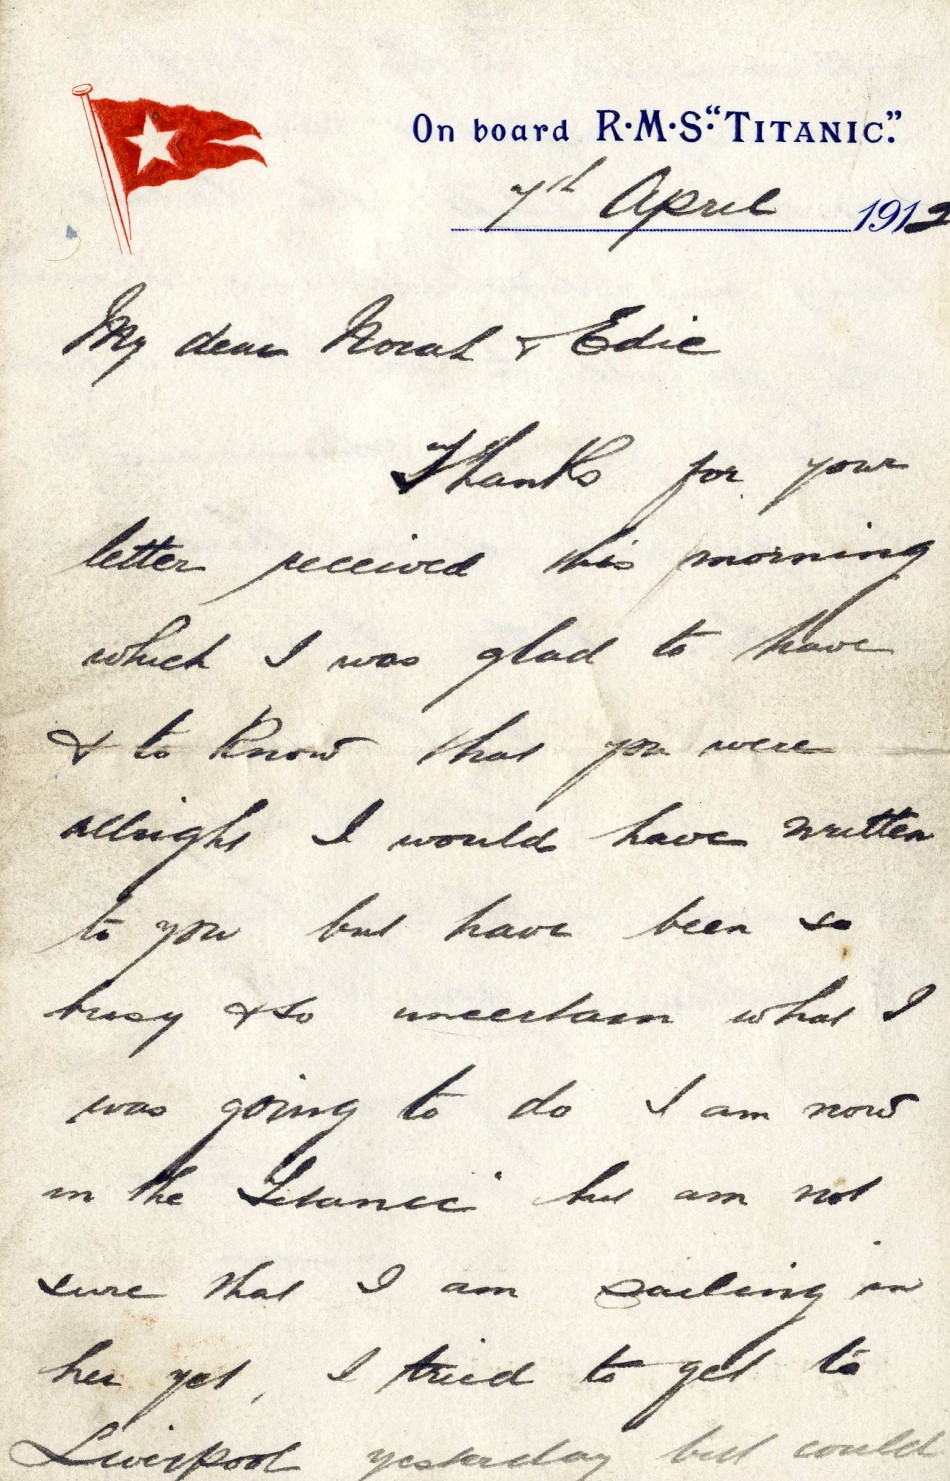 Henry Wildes letter